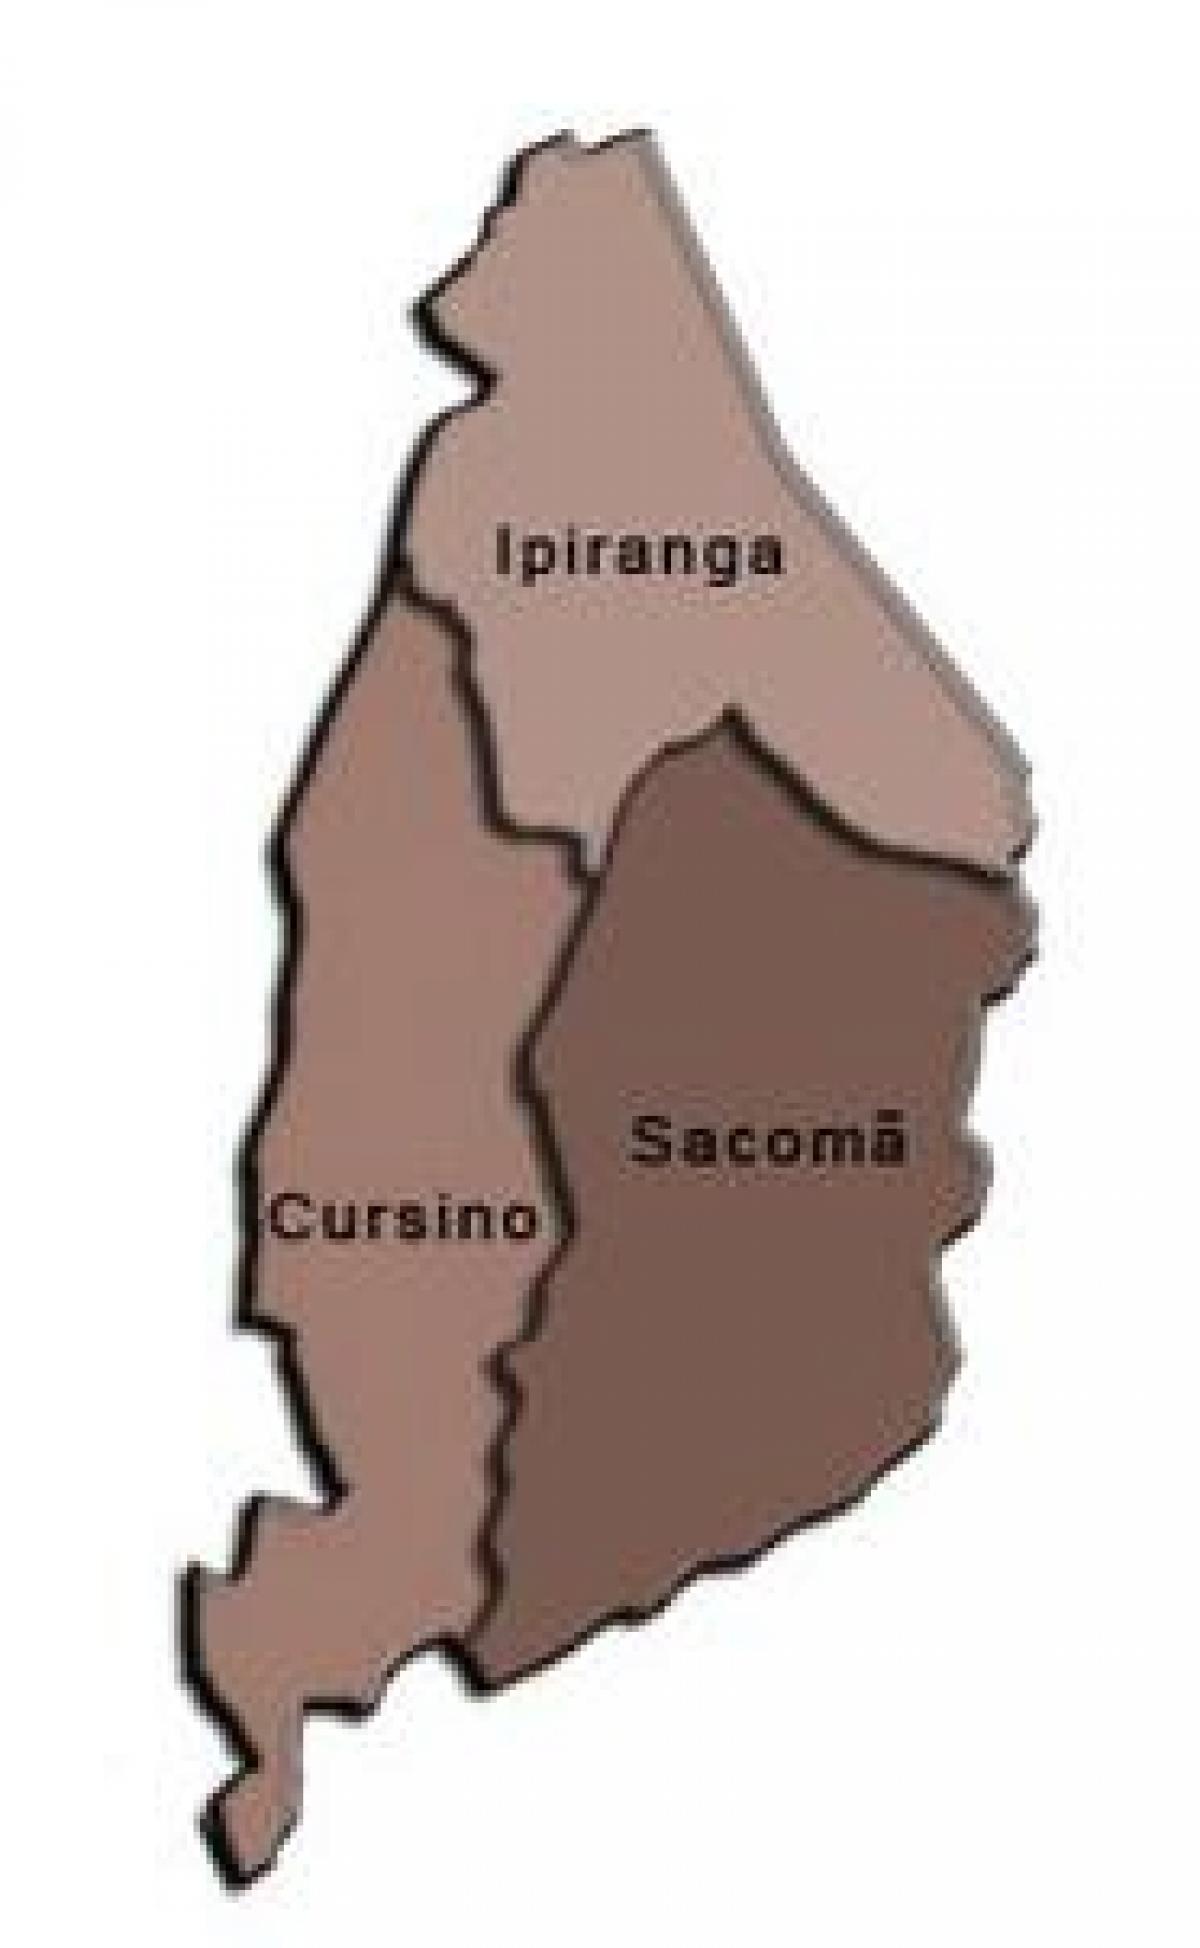 Kart over Ipiranga sub-prefecture